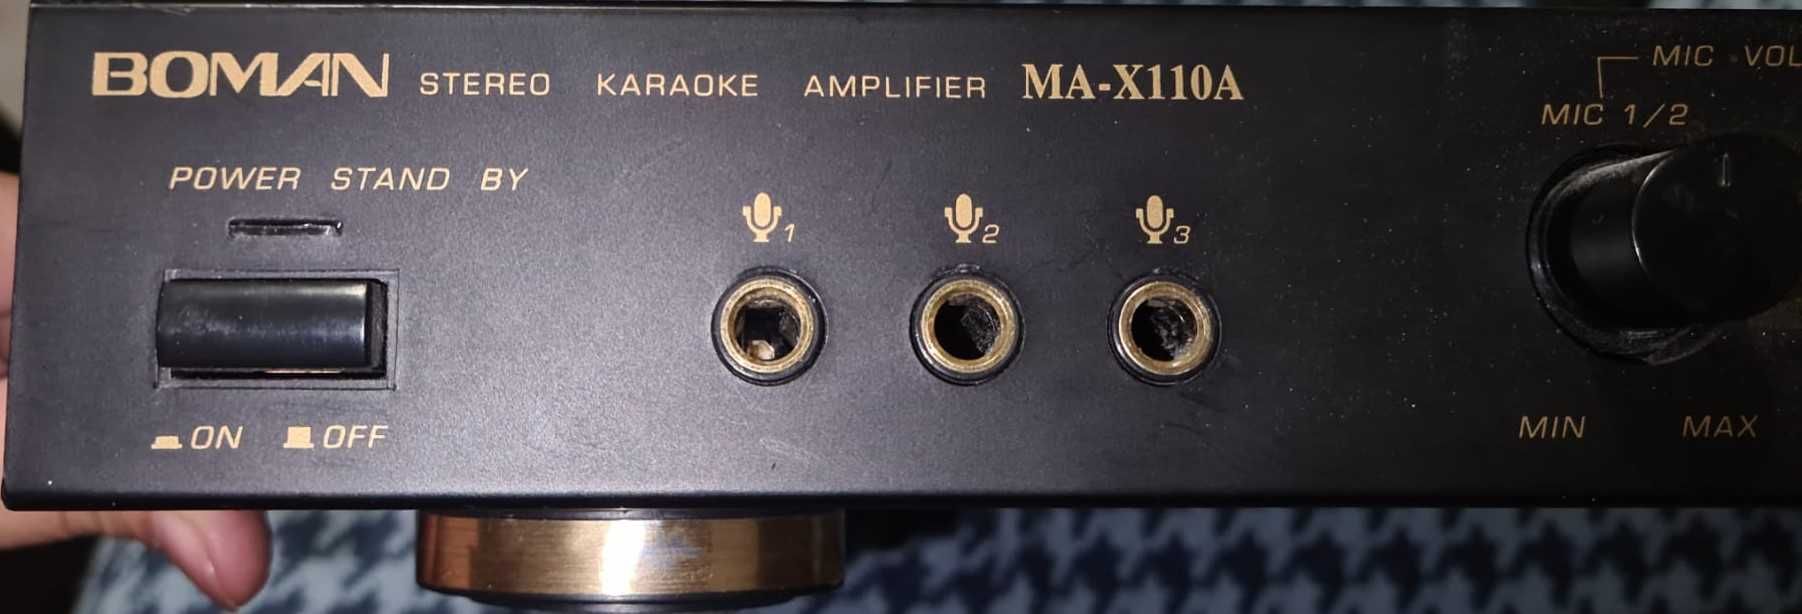 Statie karaoke / amplimificator Boman - MA-X110A